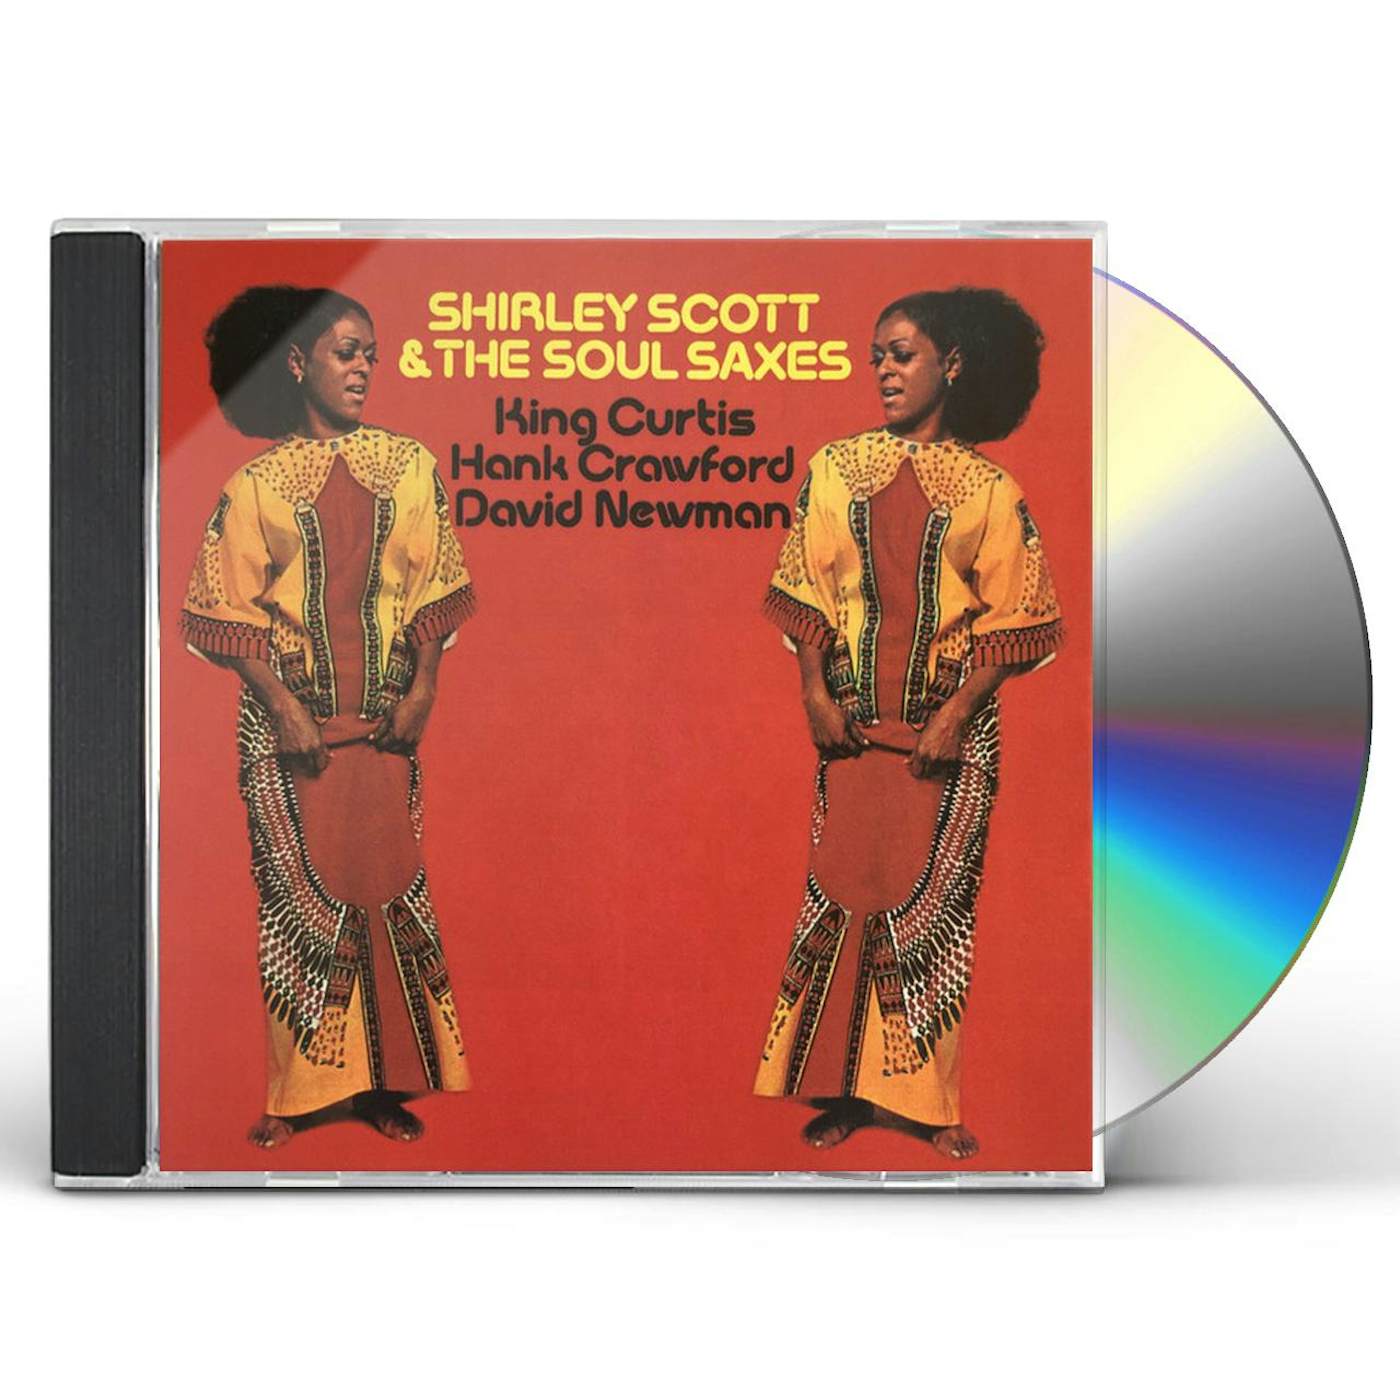 SHIRLEY SCOTT & THE SOUL SAXES CD